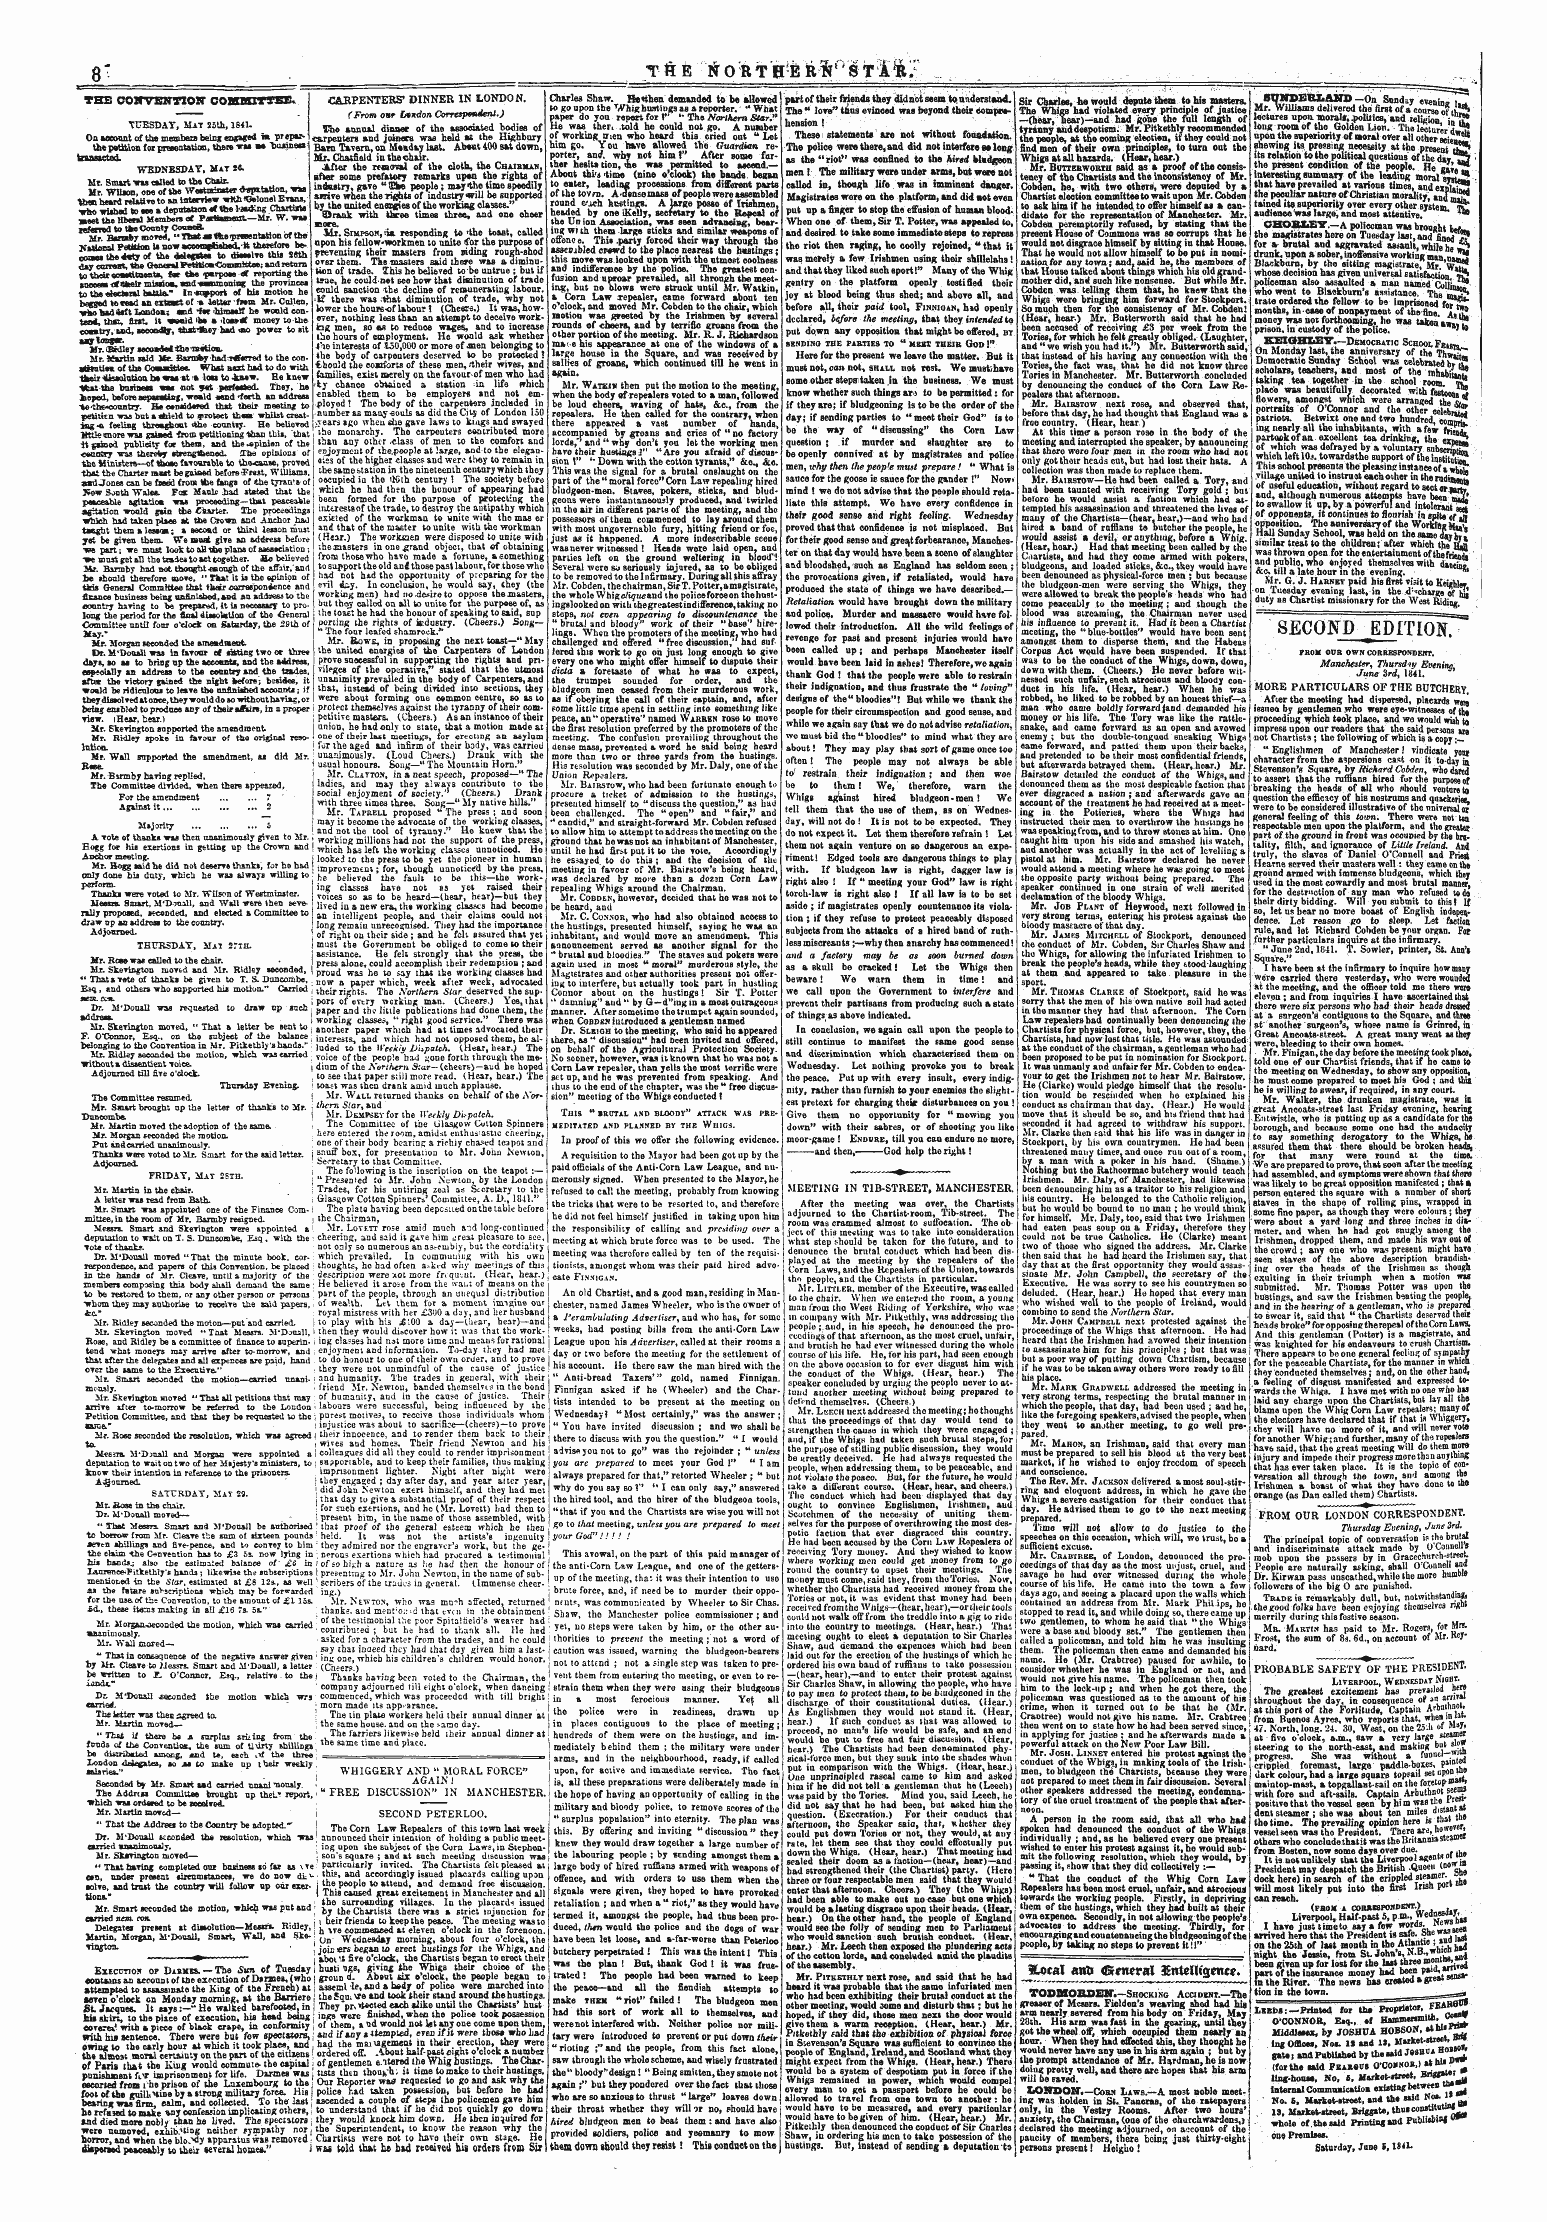 Northern Star (1837-1852): jS F Y, 2nd edition - %Ocal Aim General Enteutgence.